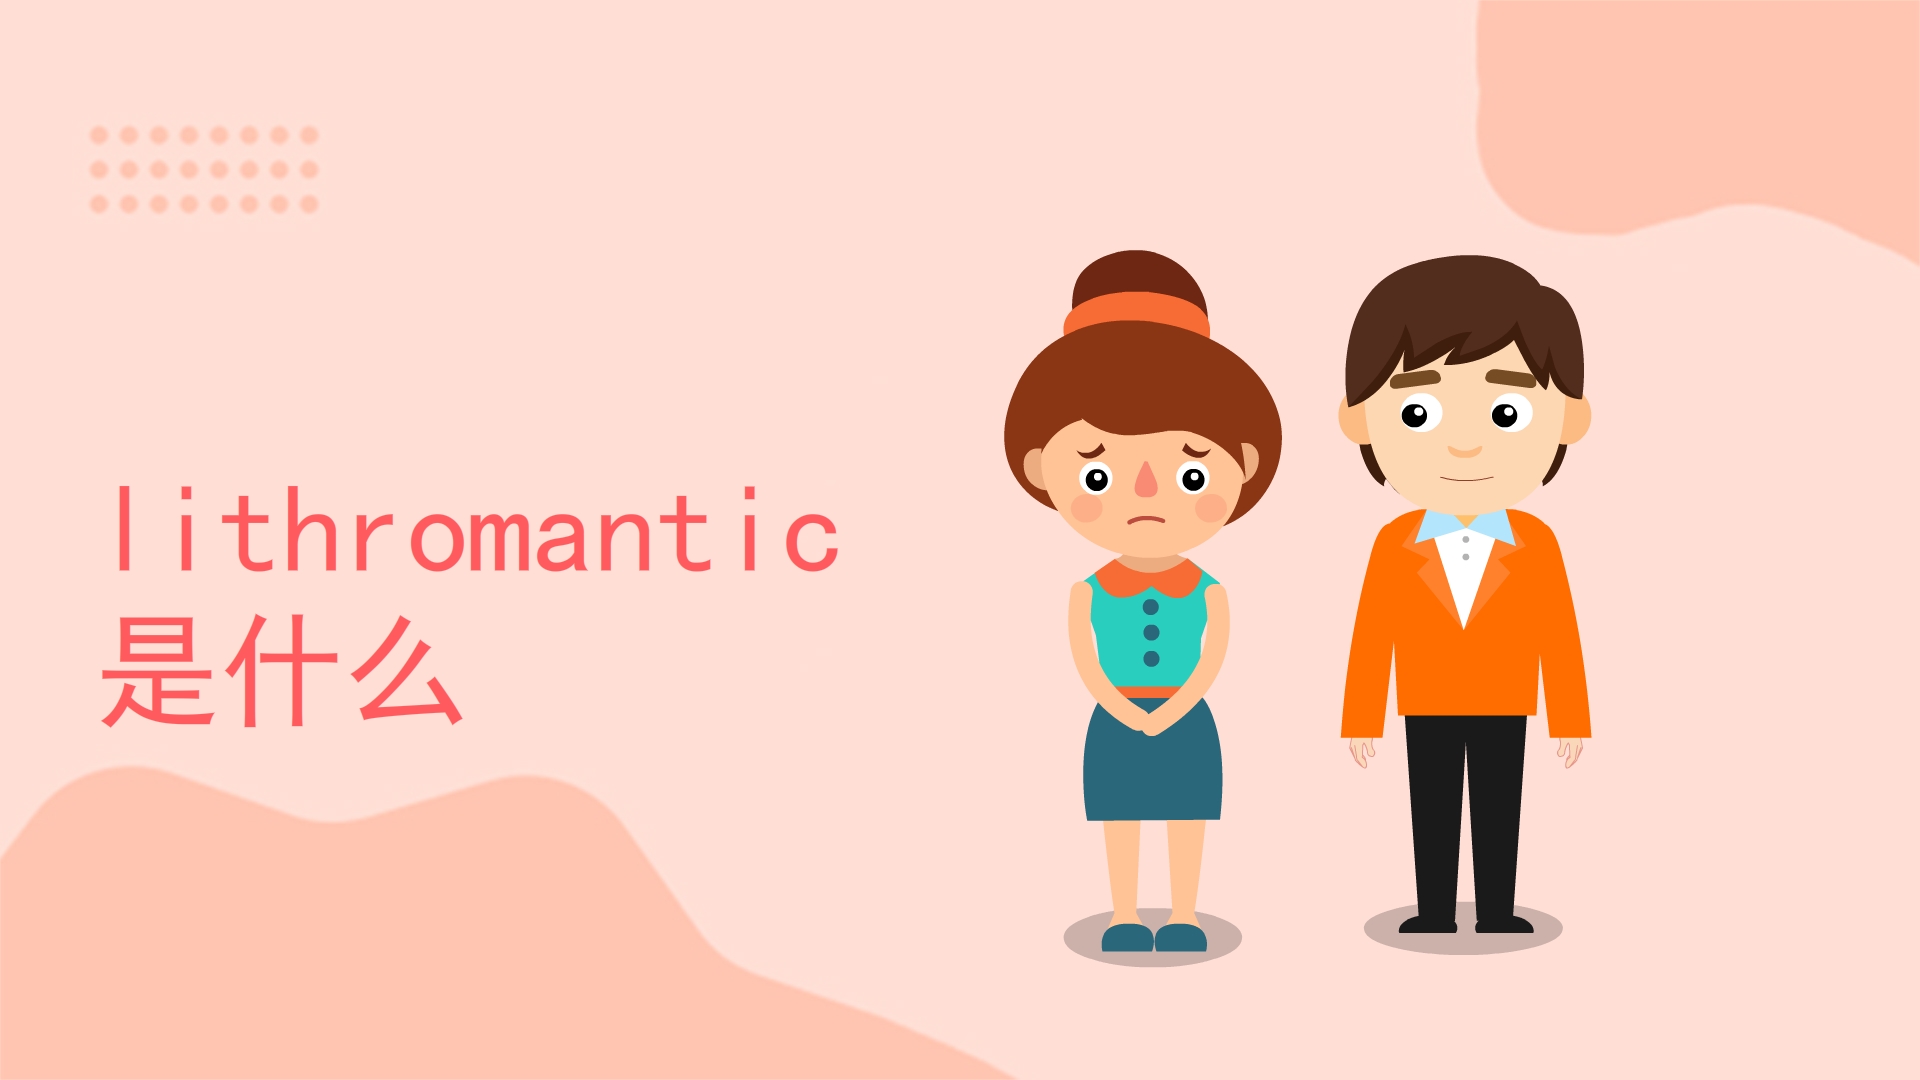 iithromantic是什么意思